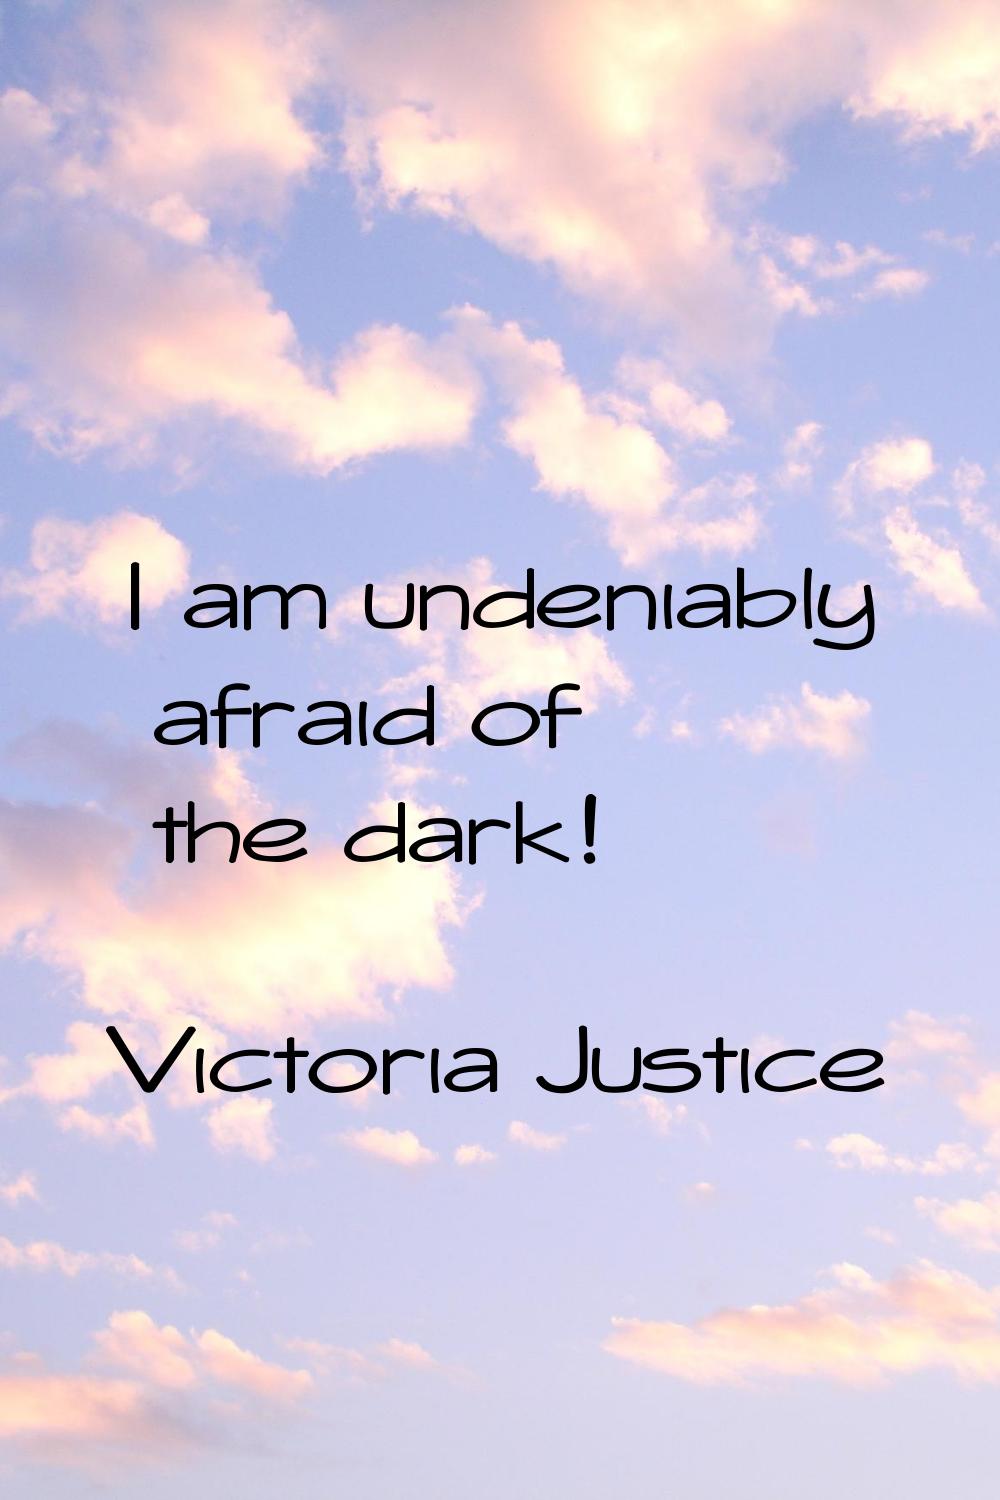 I am undeniably afraid of the dark!